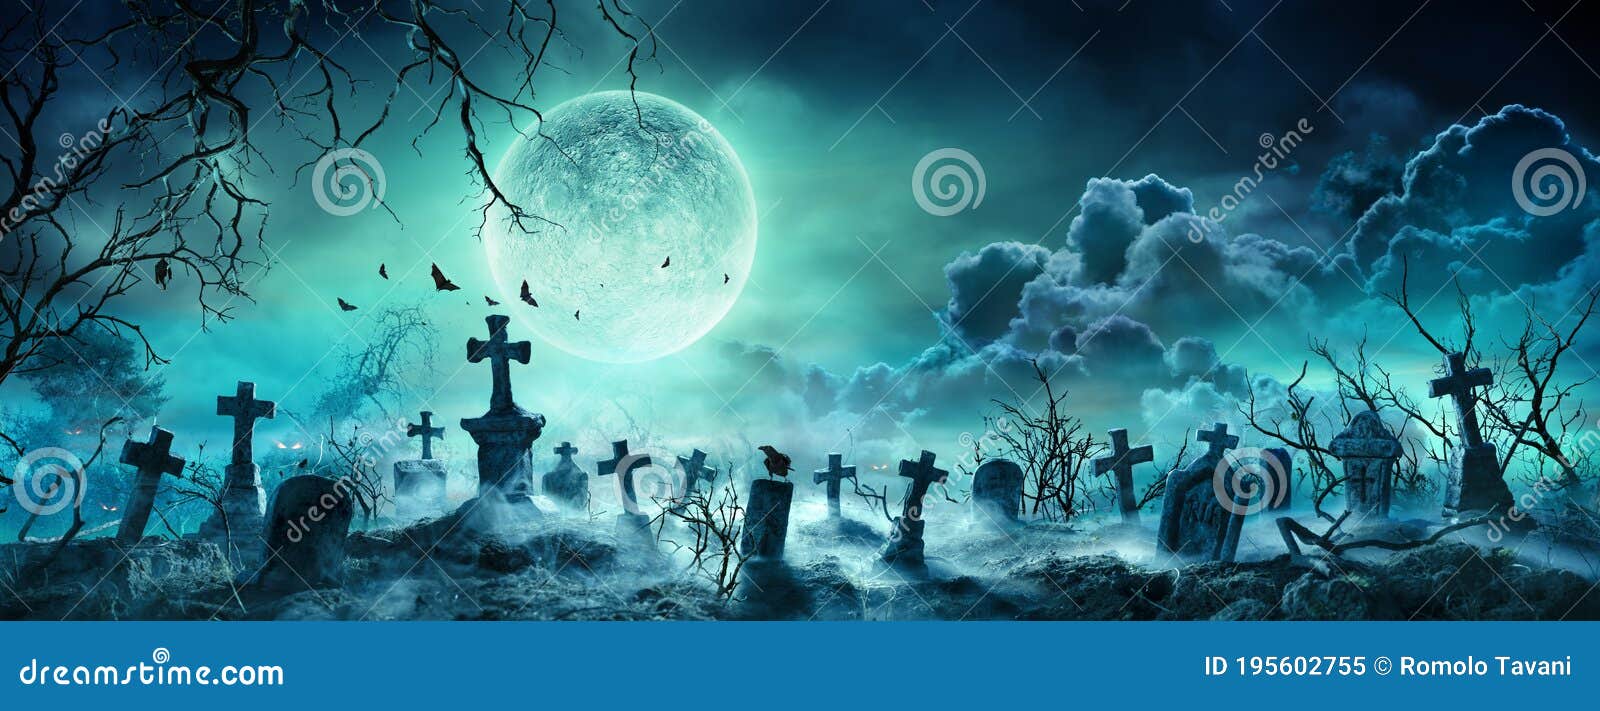 graveyard at night - spooky cemetery